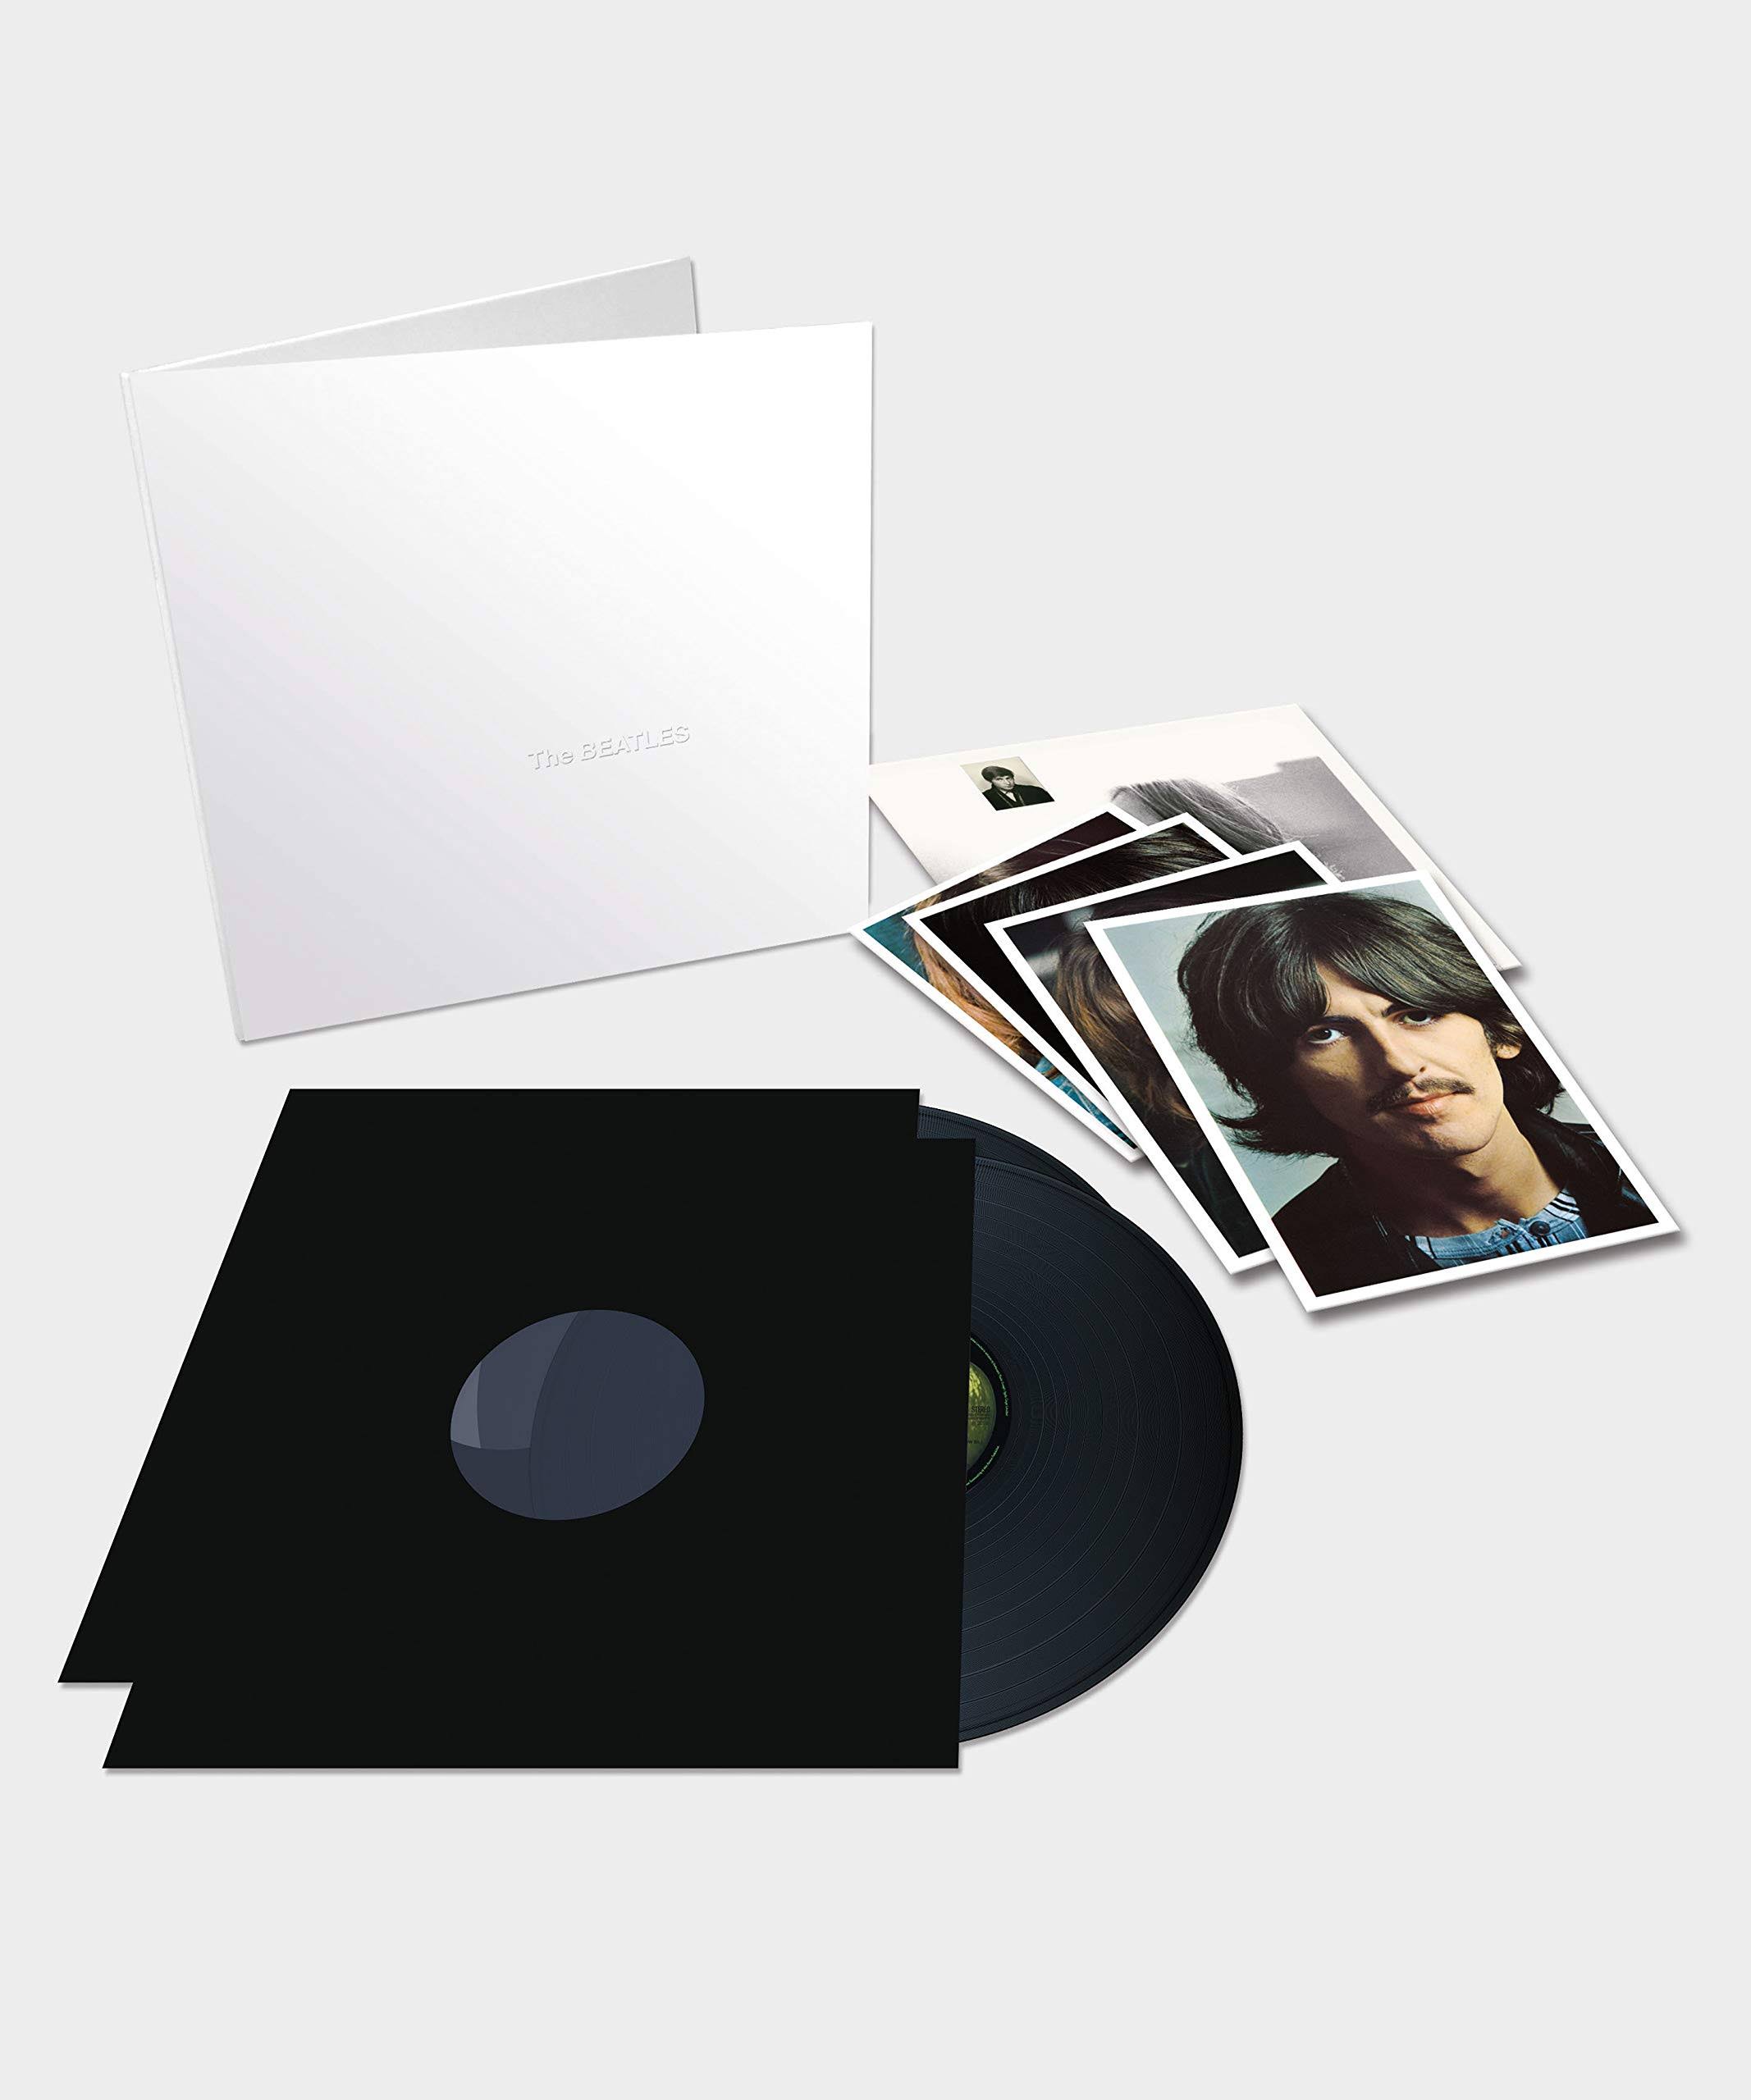 Beatles - The Beatles (White Album) Vinyl